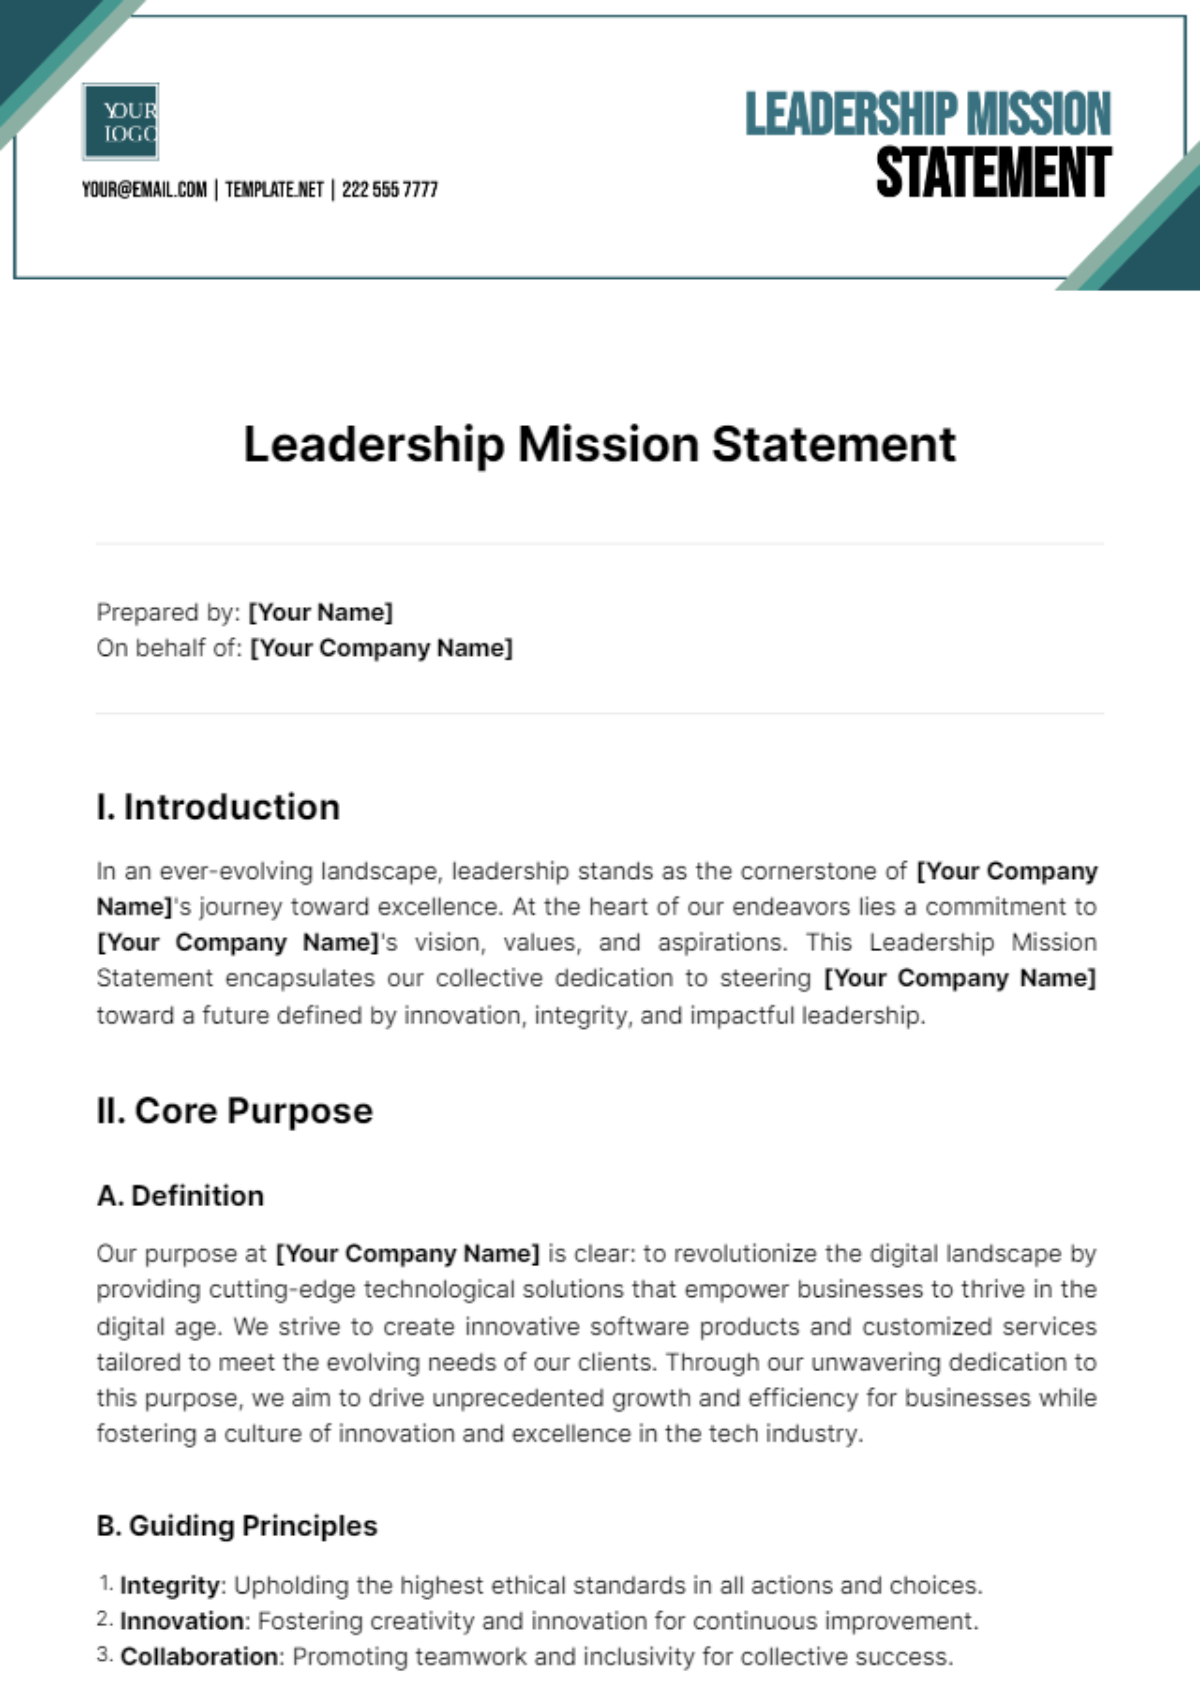 Leadership Mission Statement Template